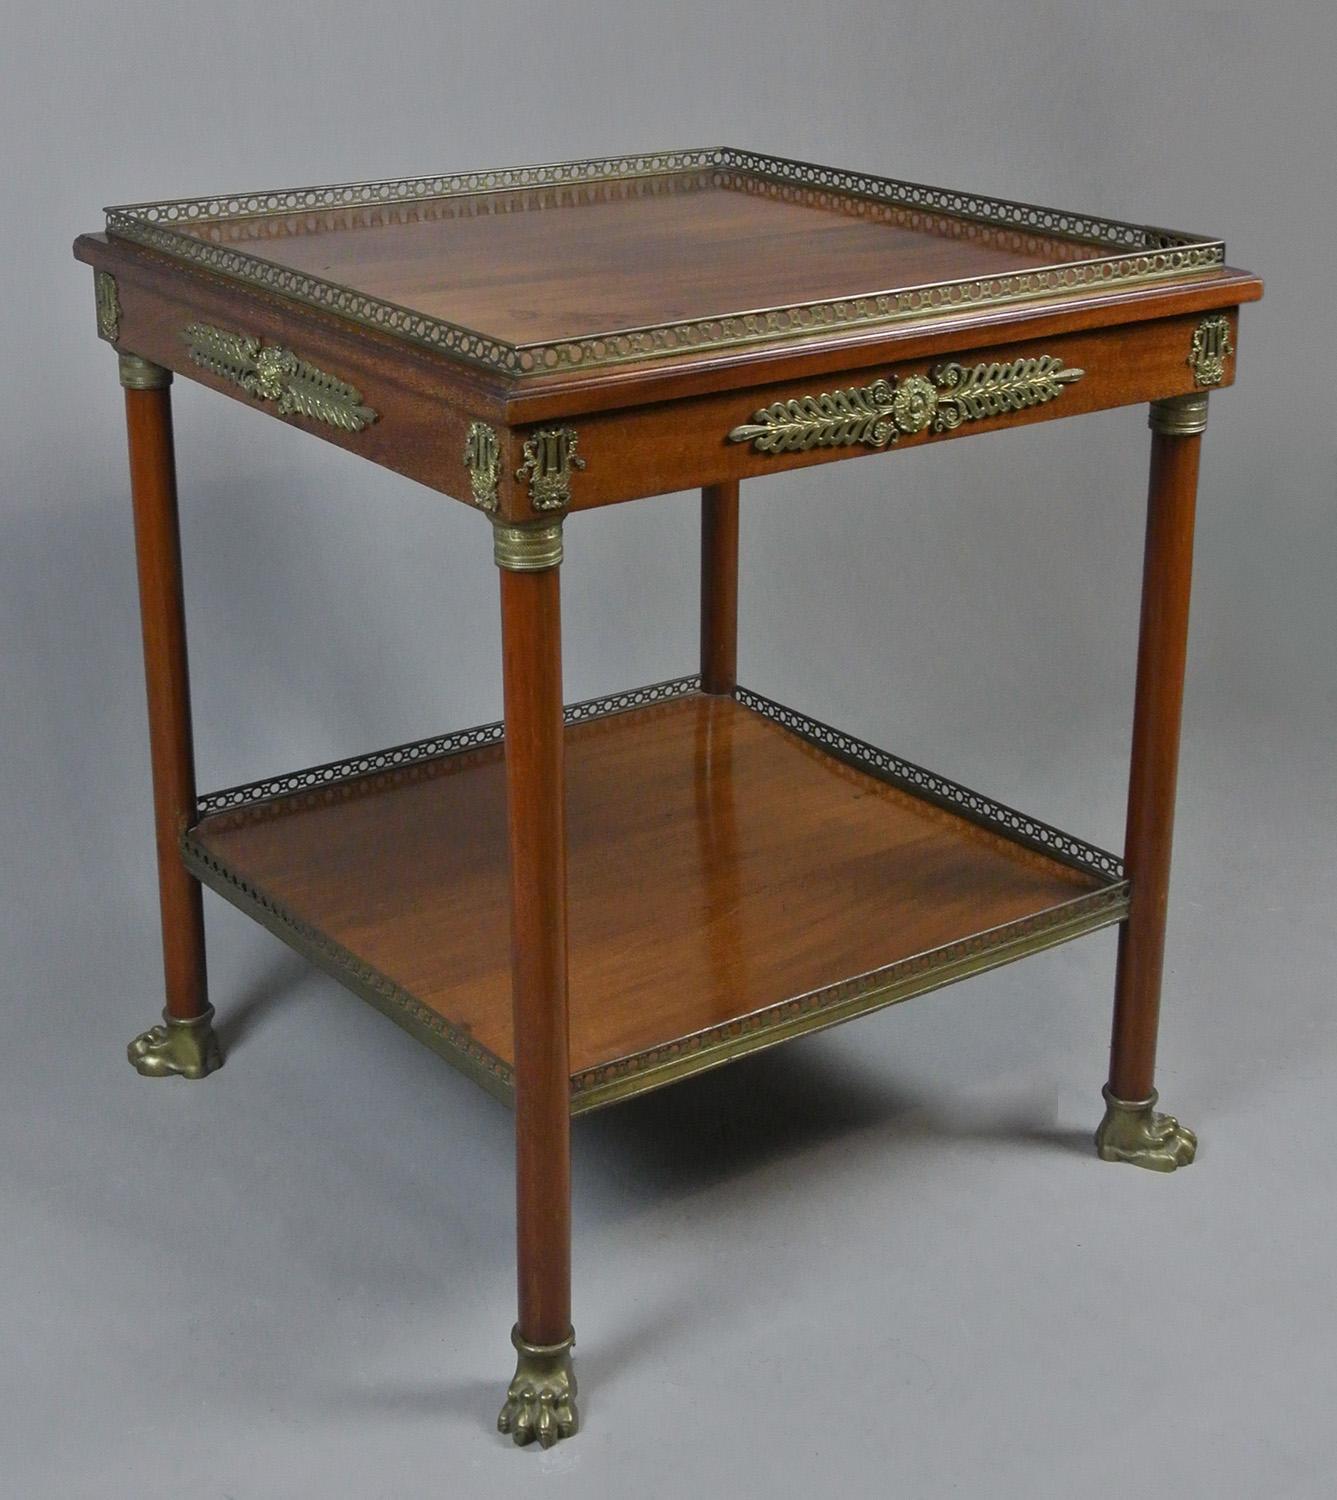 Regency Mahogany Empire Centre Table c. 1830 In Good Condition For Sale In Heathfield, GB